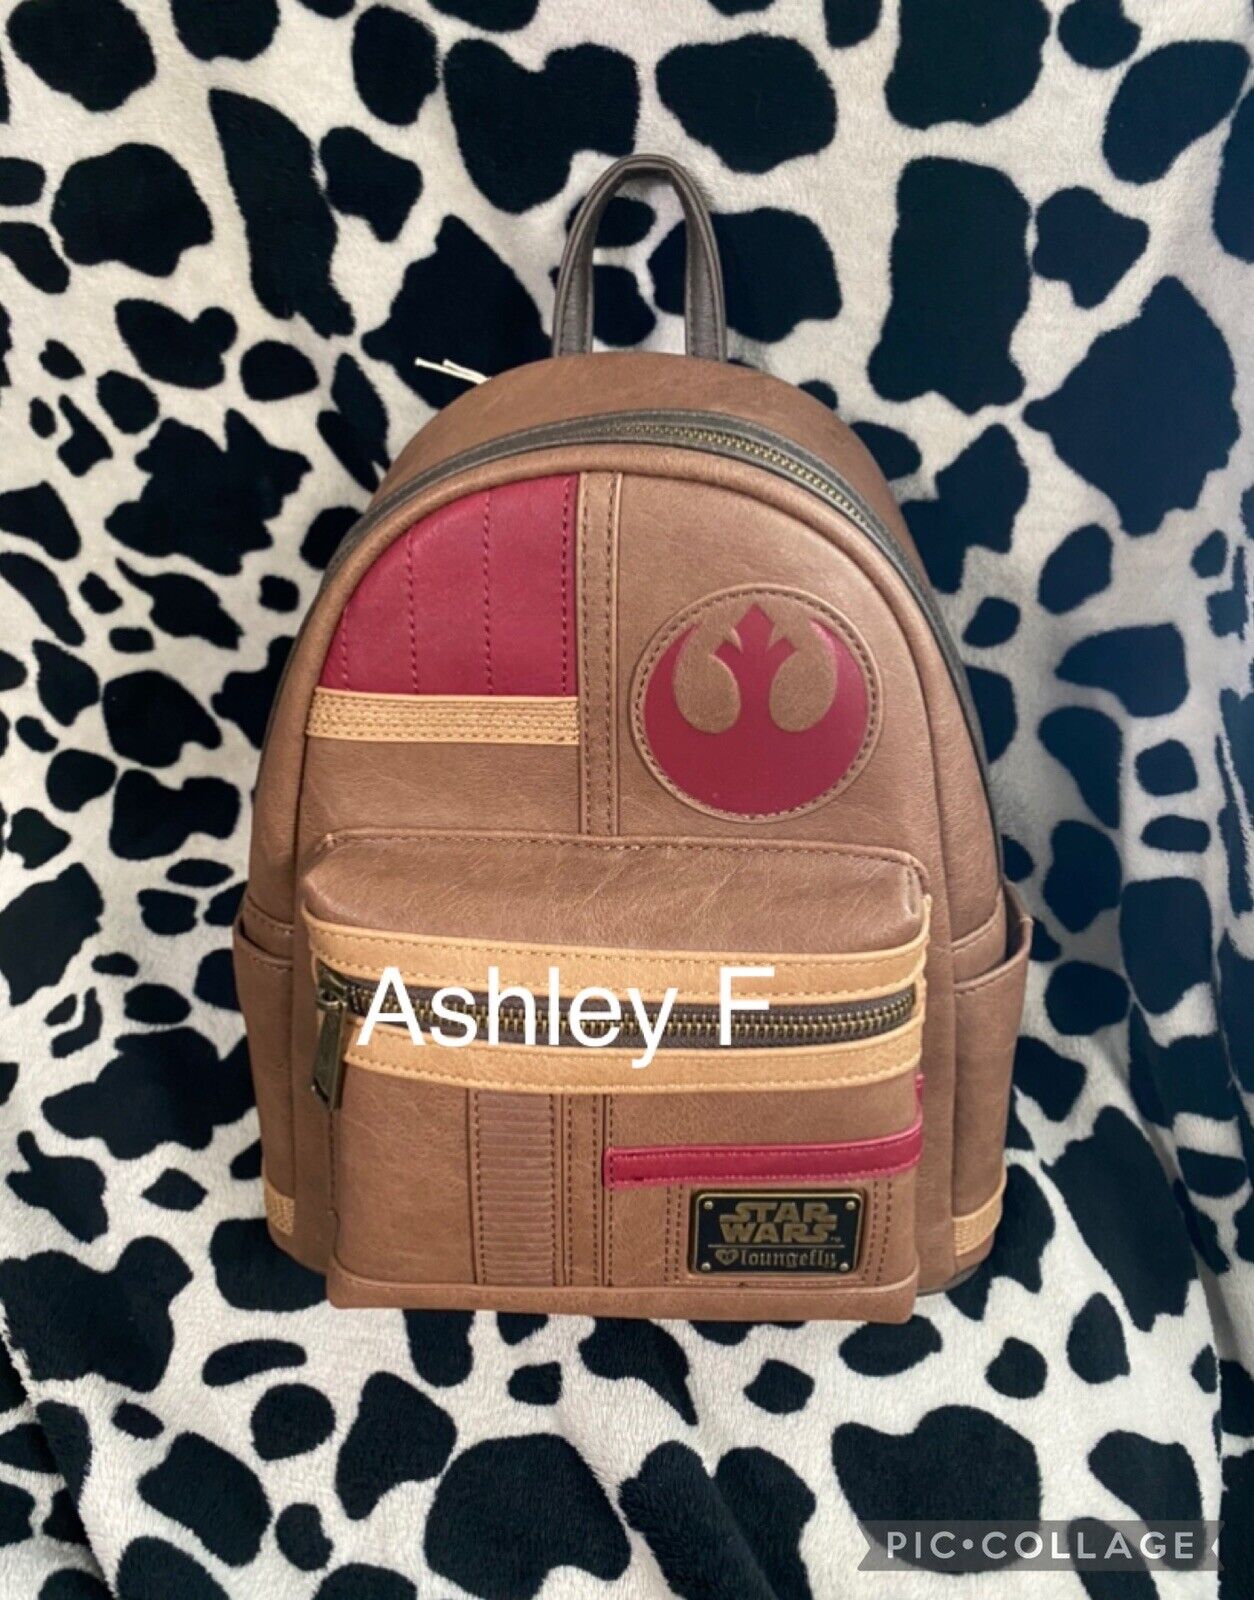 Loungefly Star Wars Finn Cosplay backpack